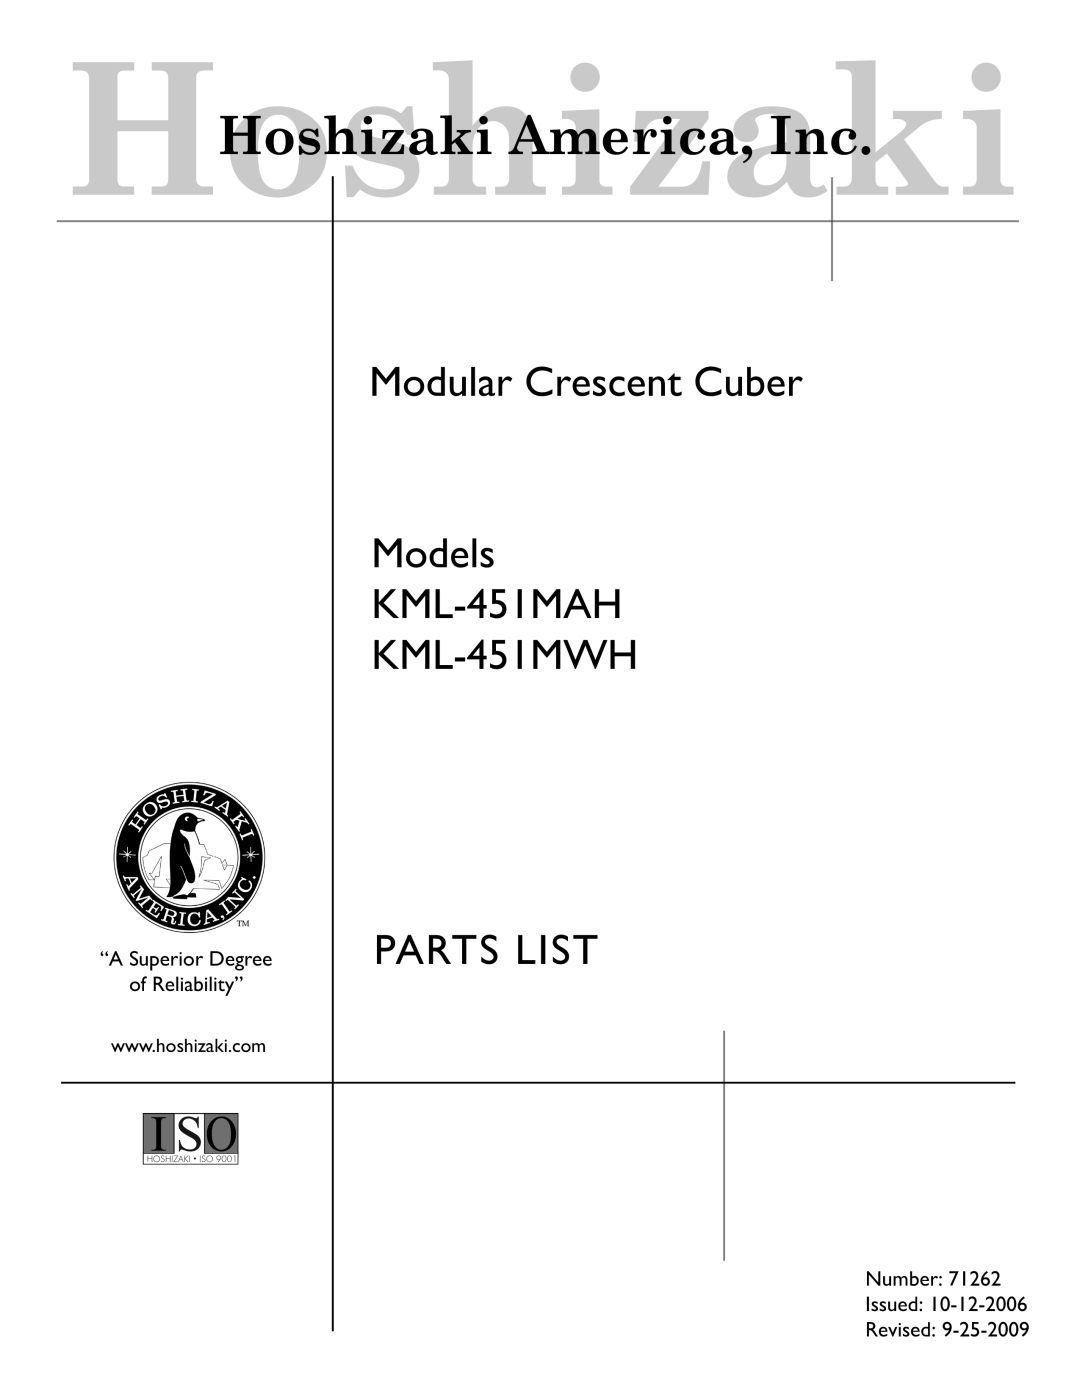 Hoshizaki manual Modular Crescent Cuber Models KML-451MAH KML-451MWH, Parts List, HoshizakiHoshizaki America, Inc 